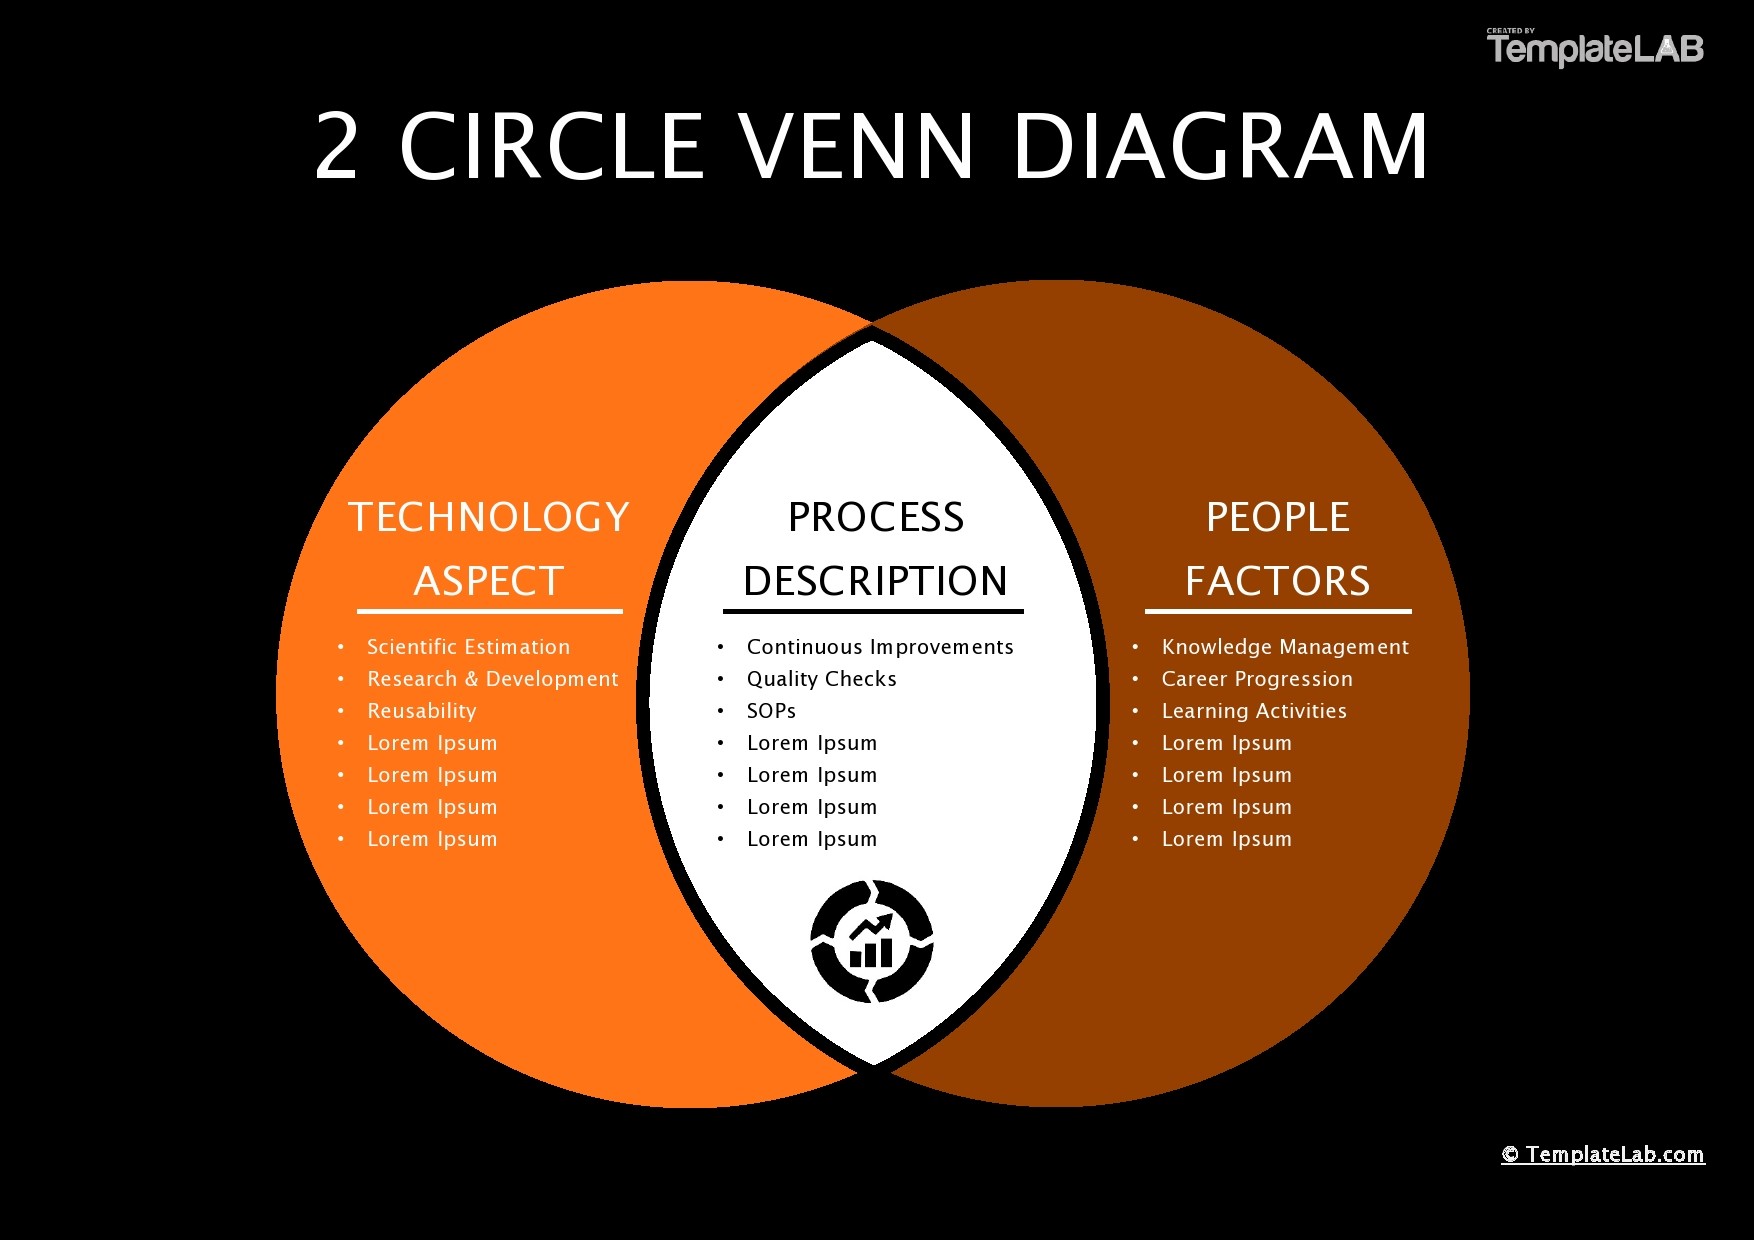 Free 2 Circle Venn Diagram Template 01 - TemplateLab.com